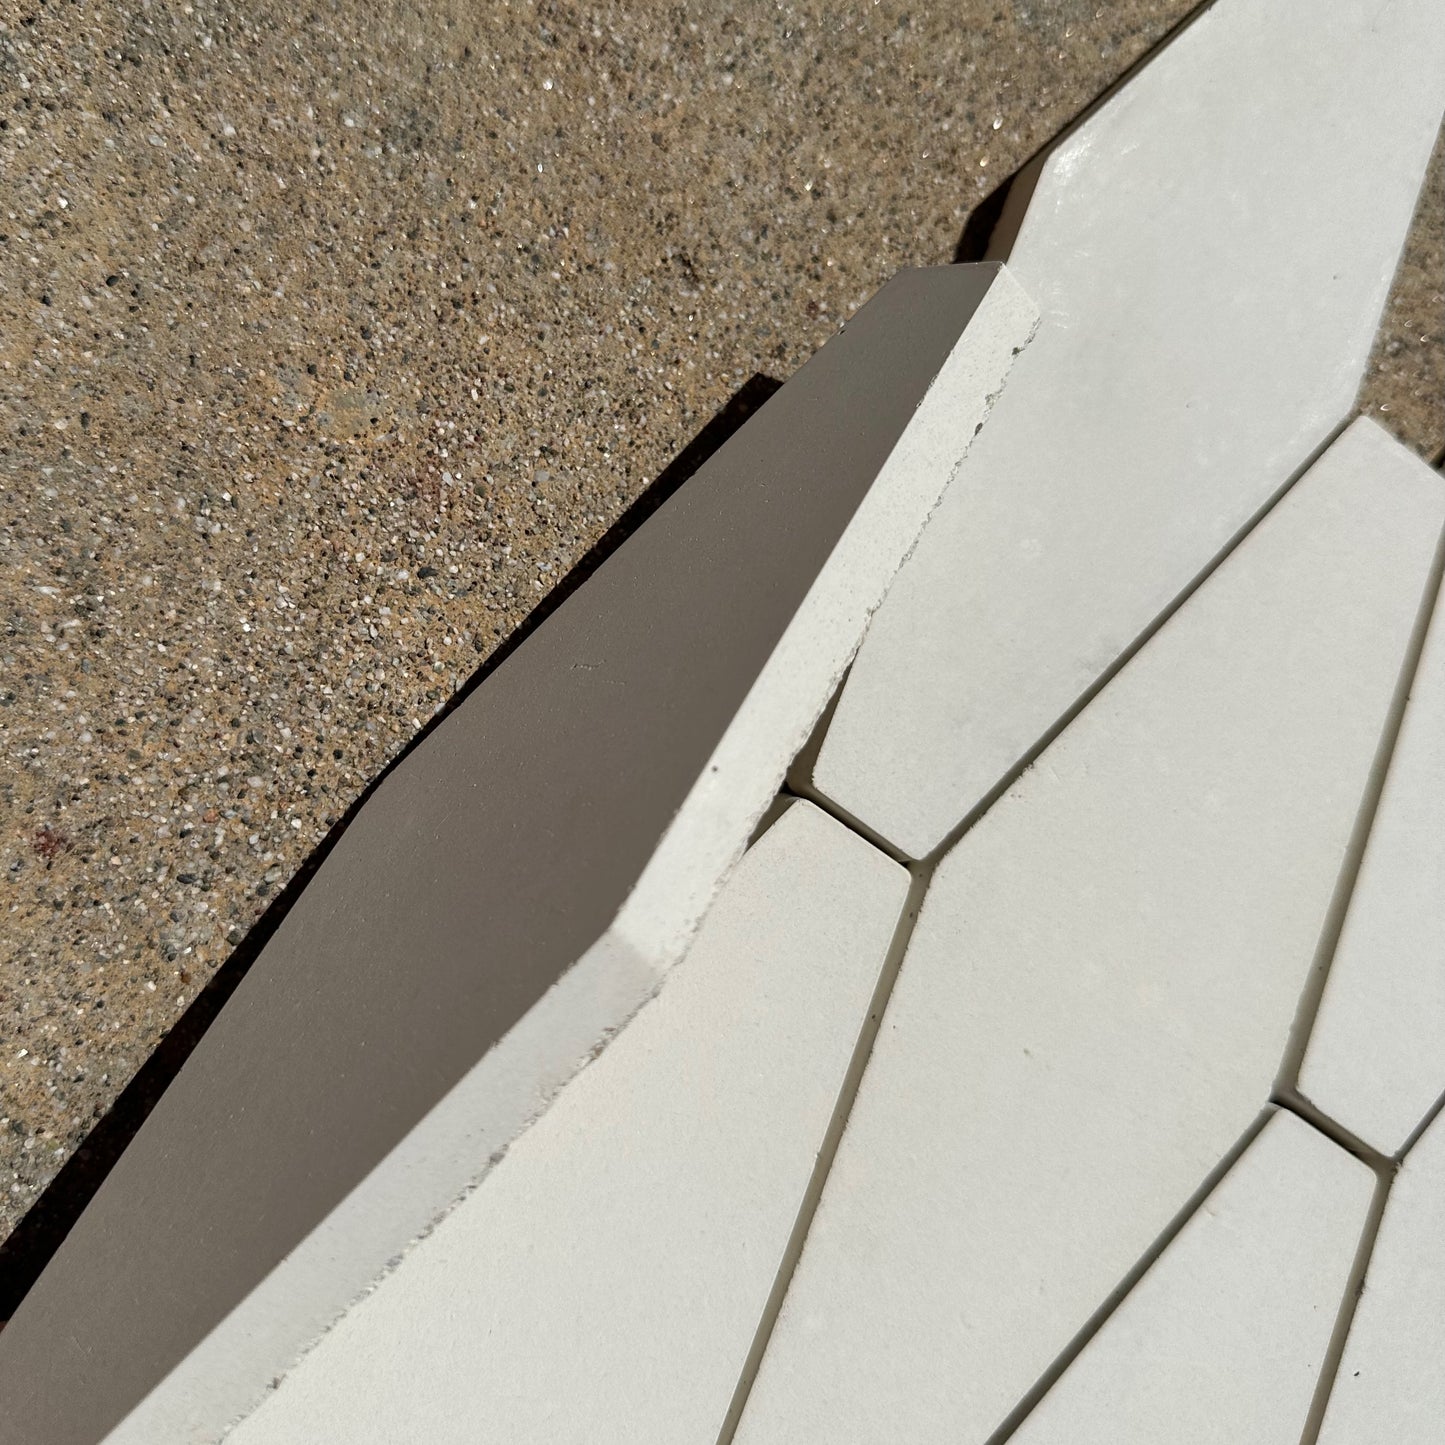 Tesselle | Élan White 8"x2.5" Elongated Hex Cement Wall Tile